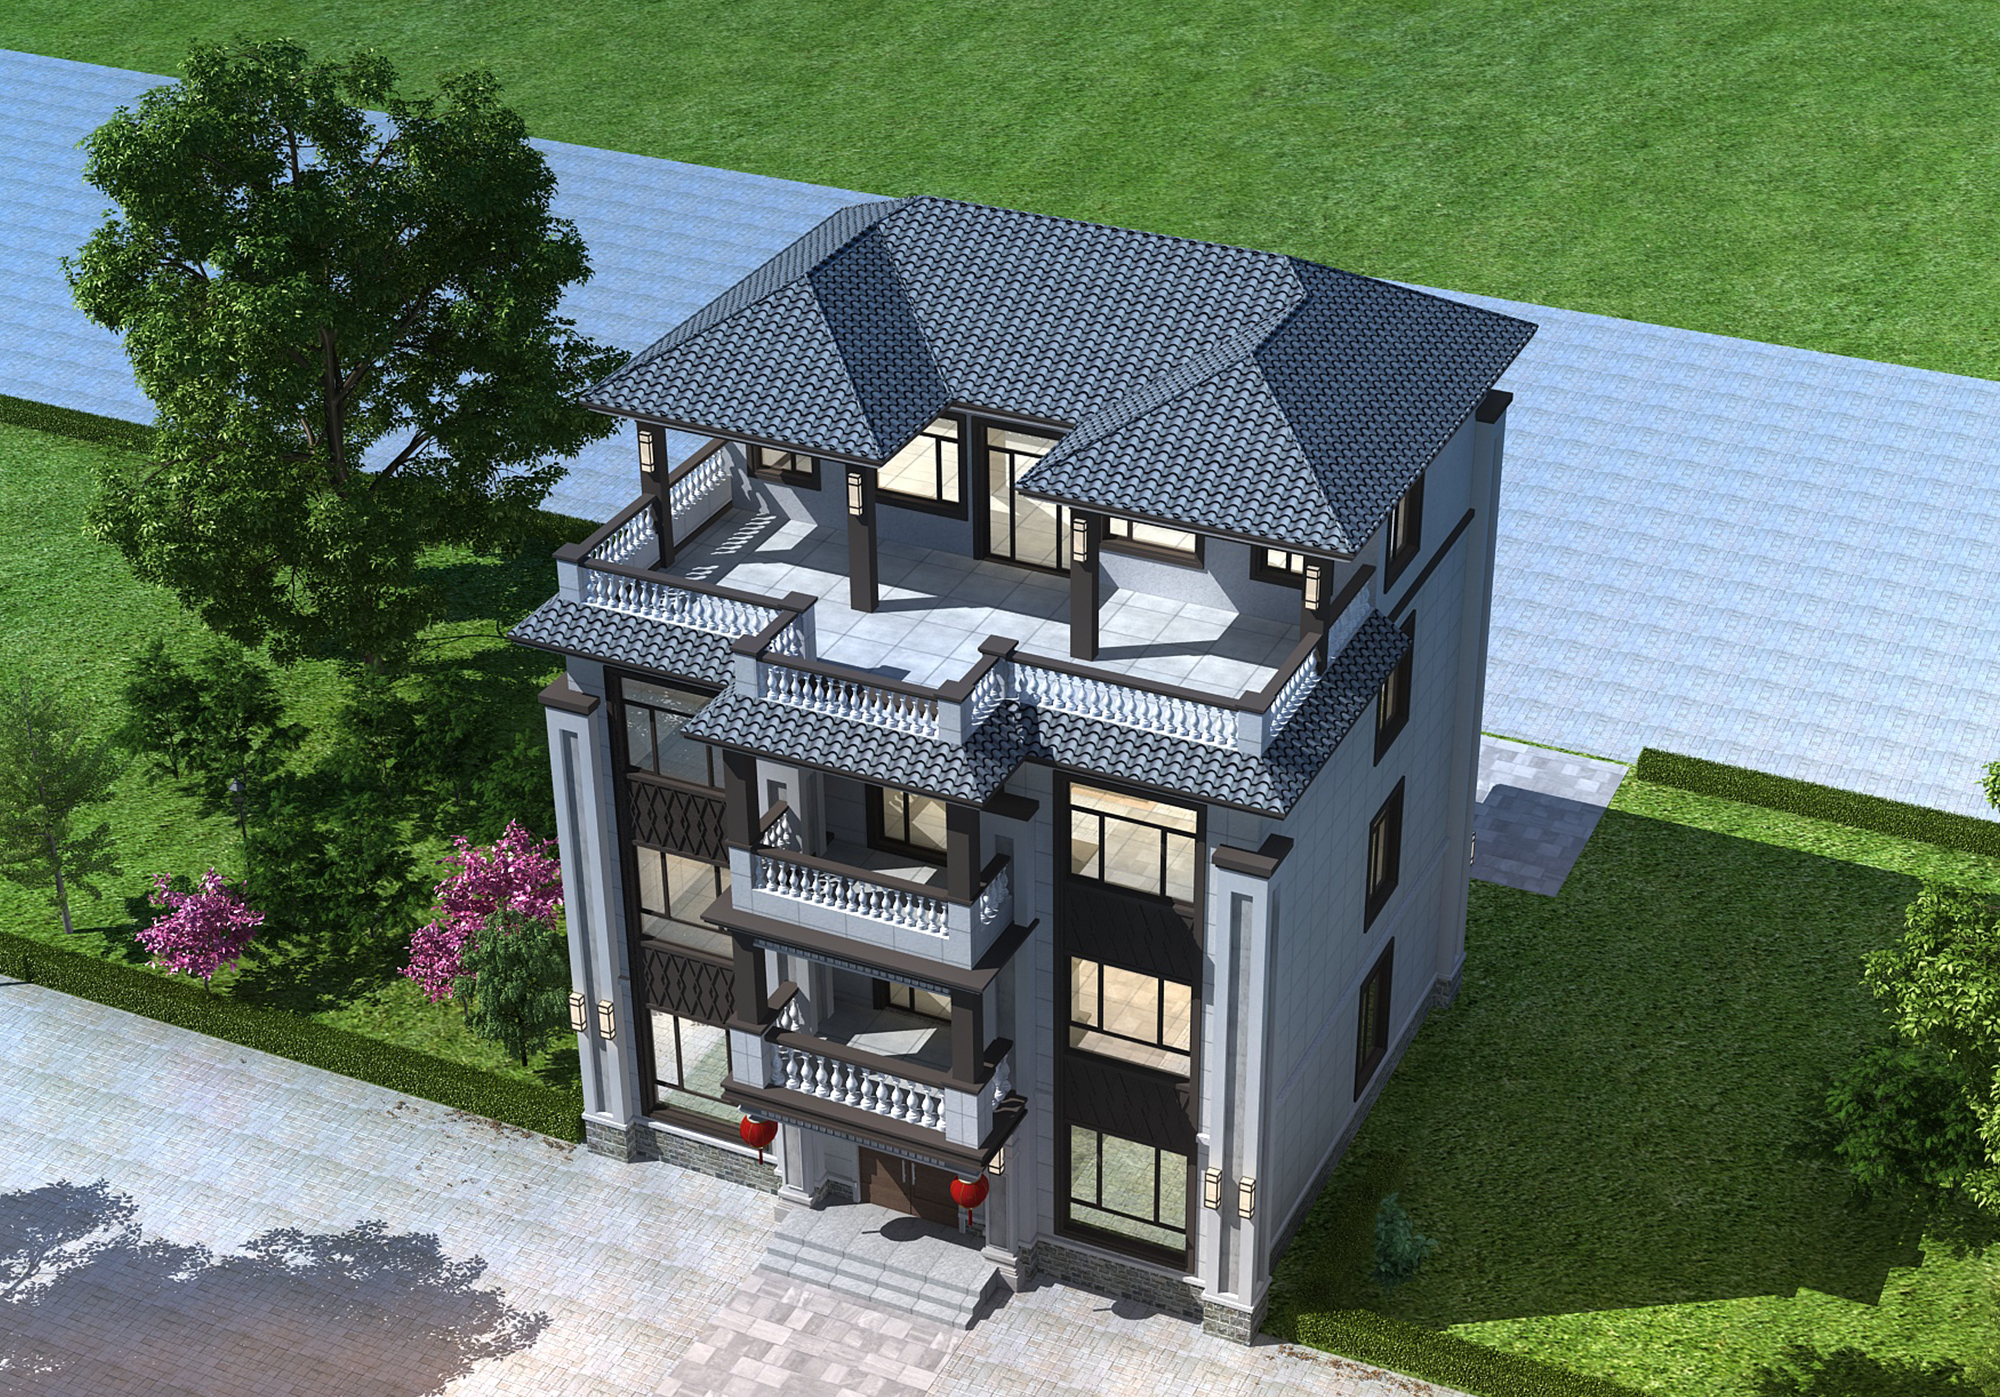 D617【自建房设计】农村盖房就选这款四层新中式别墅够大气